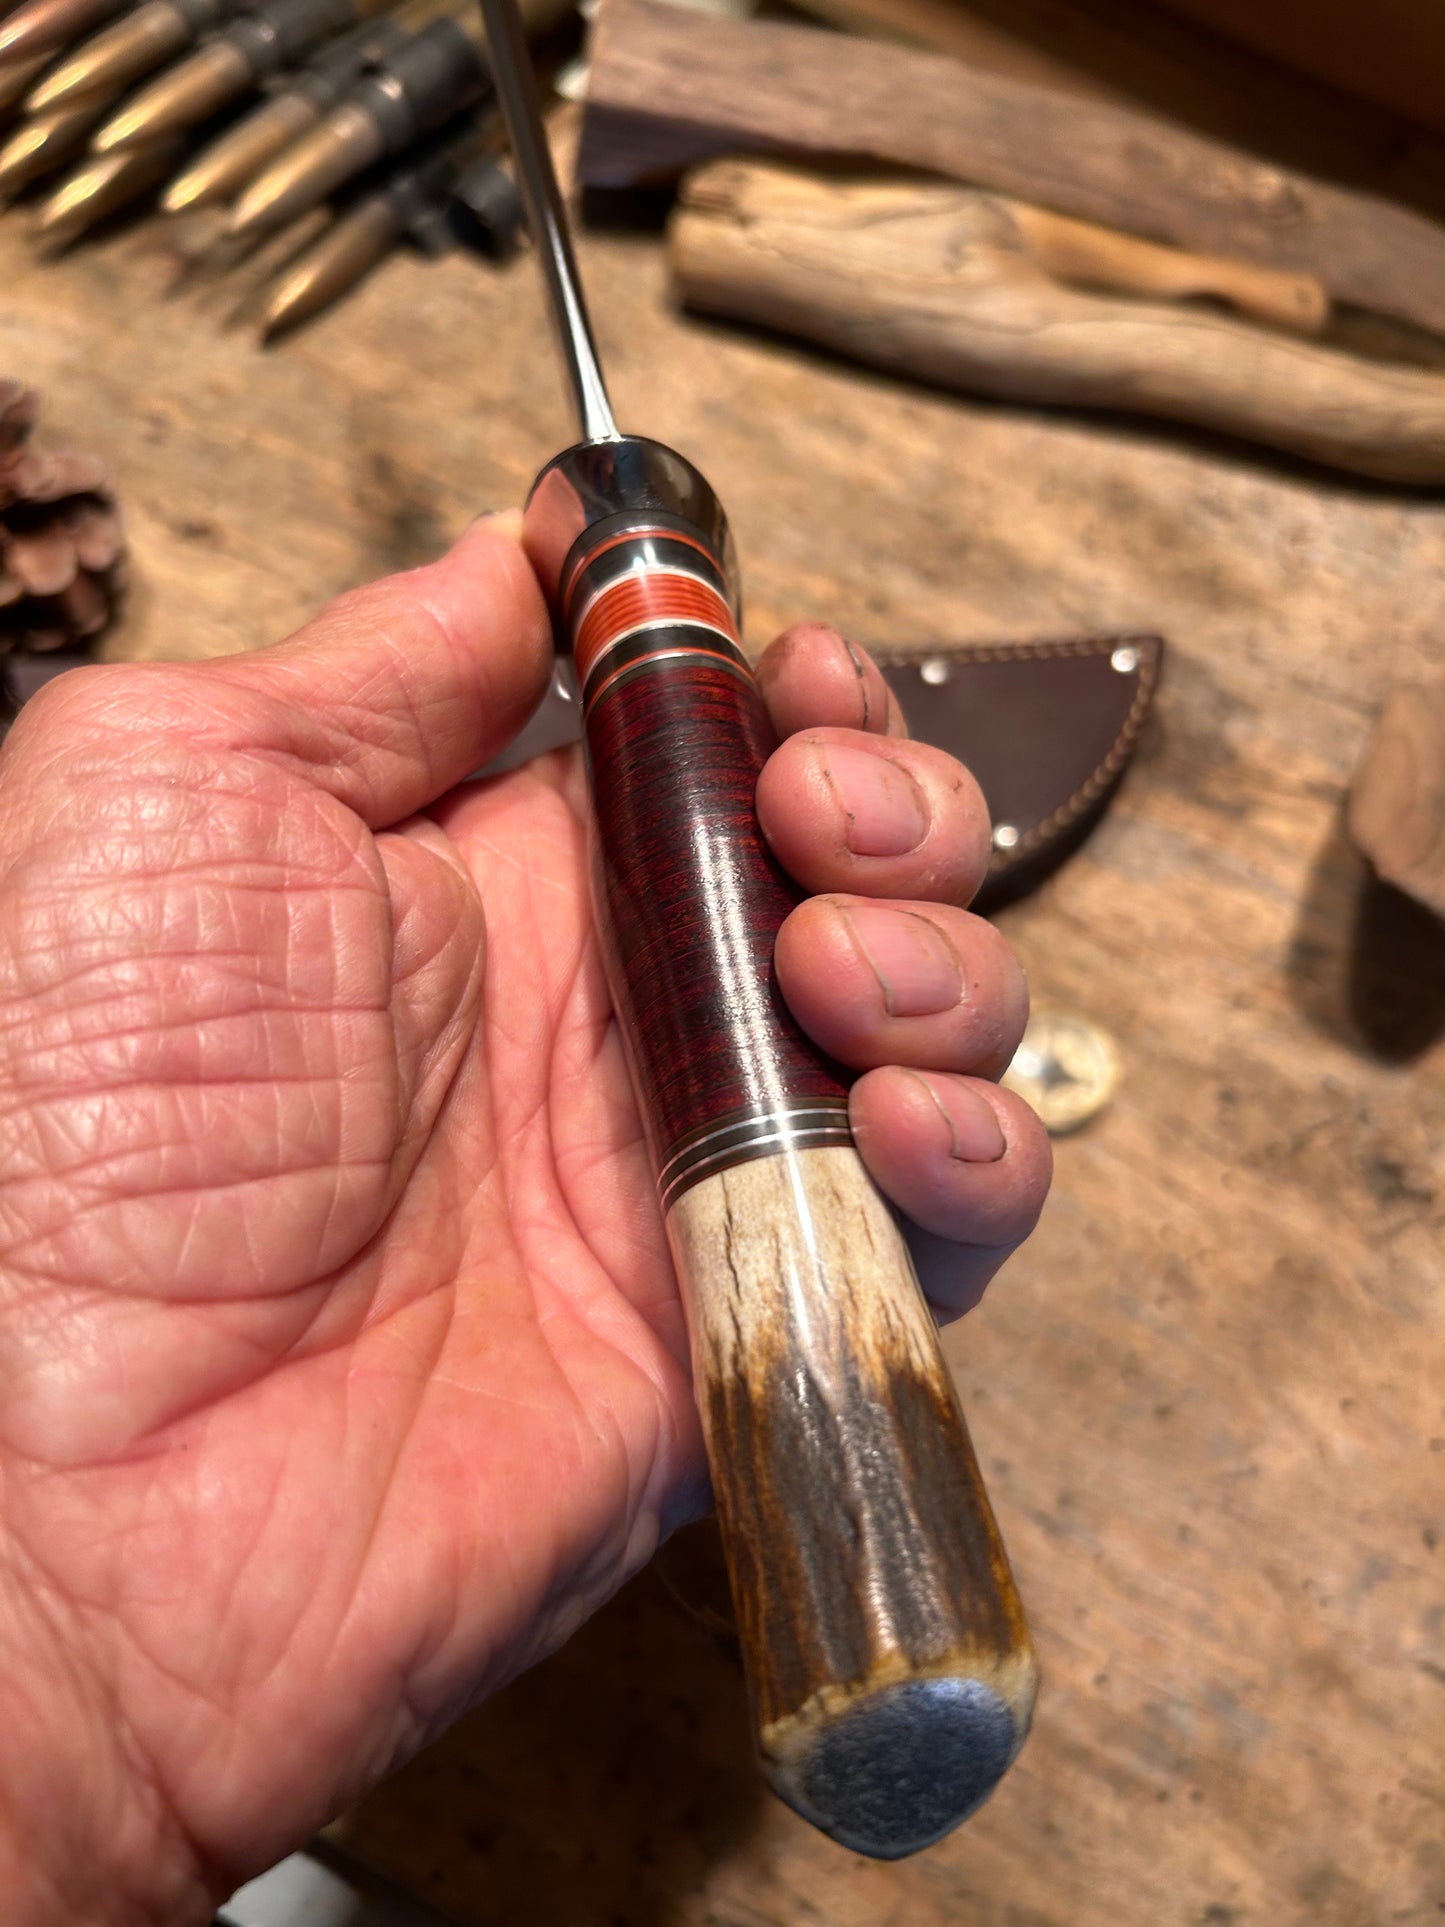 J. Behring Handmade Vintage Treeman Camp Knife Old Stamp 7" Blade